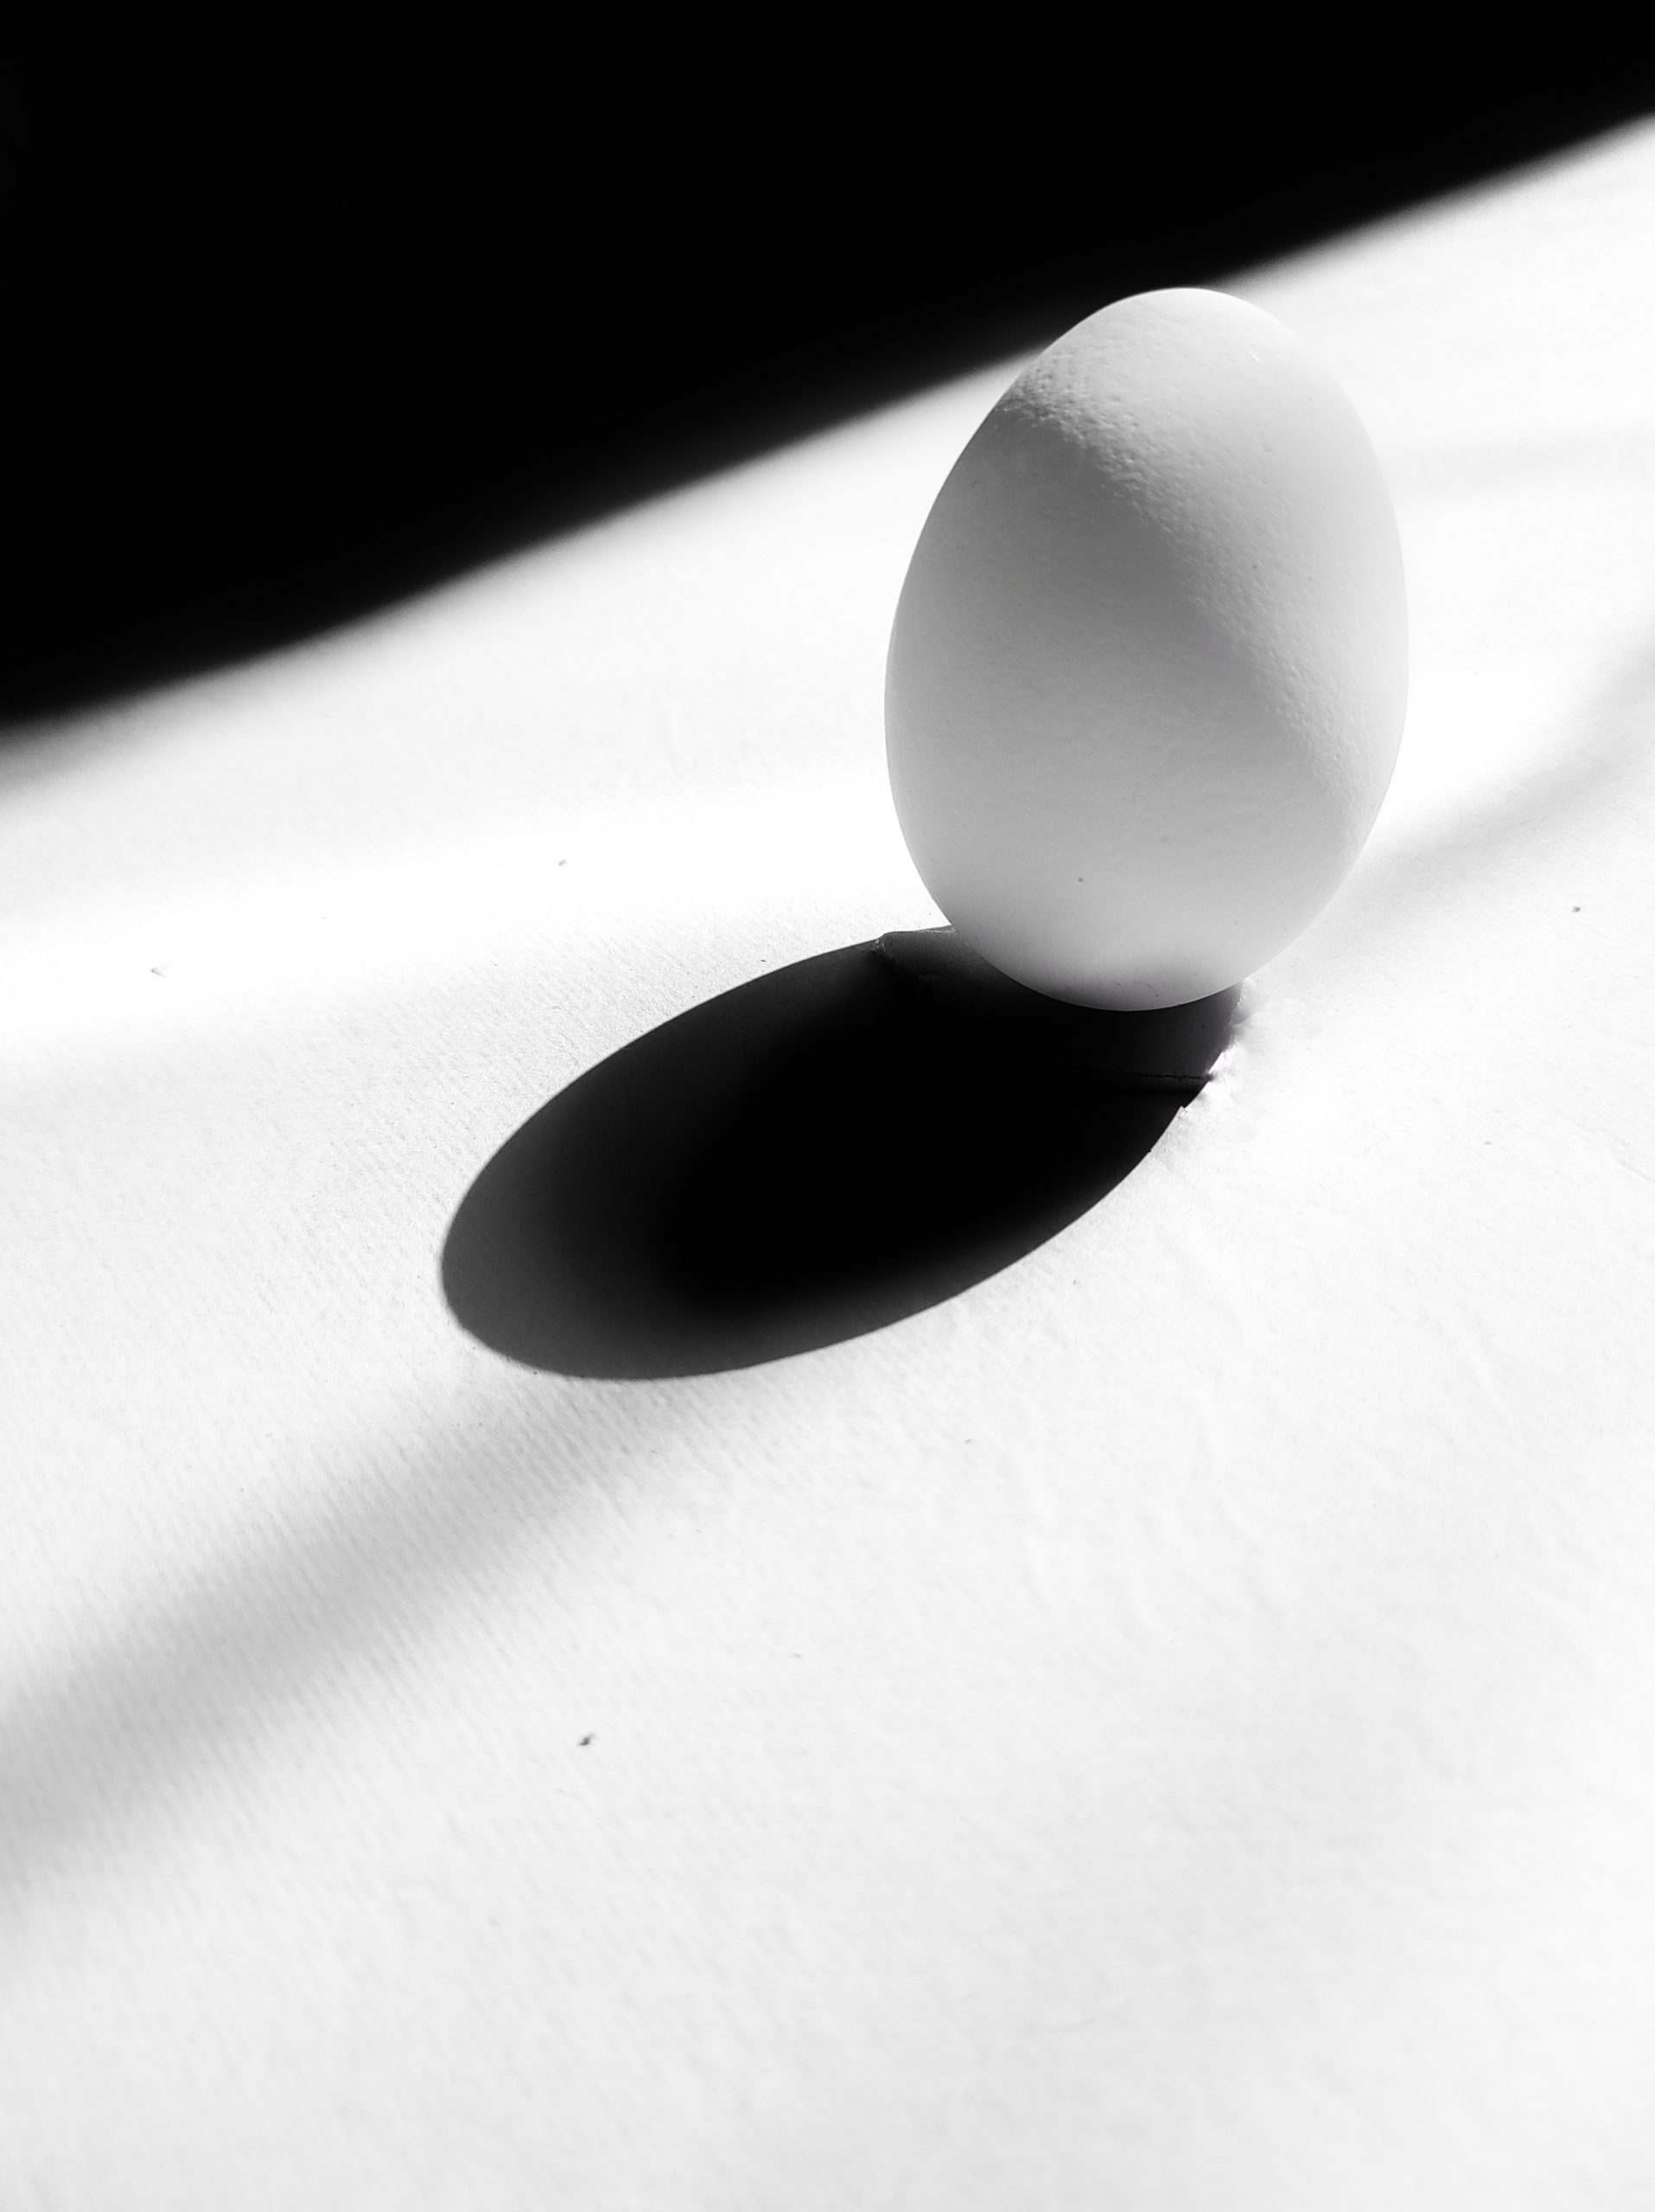 Shadow of egg and egg